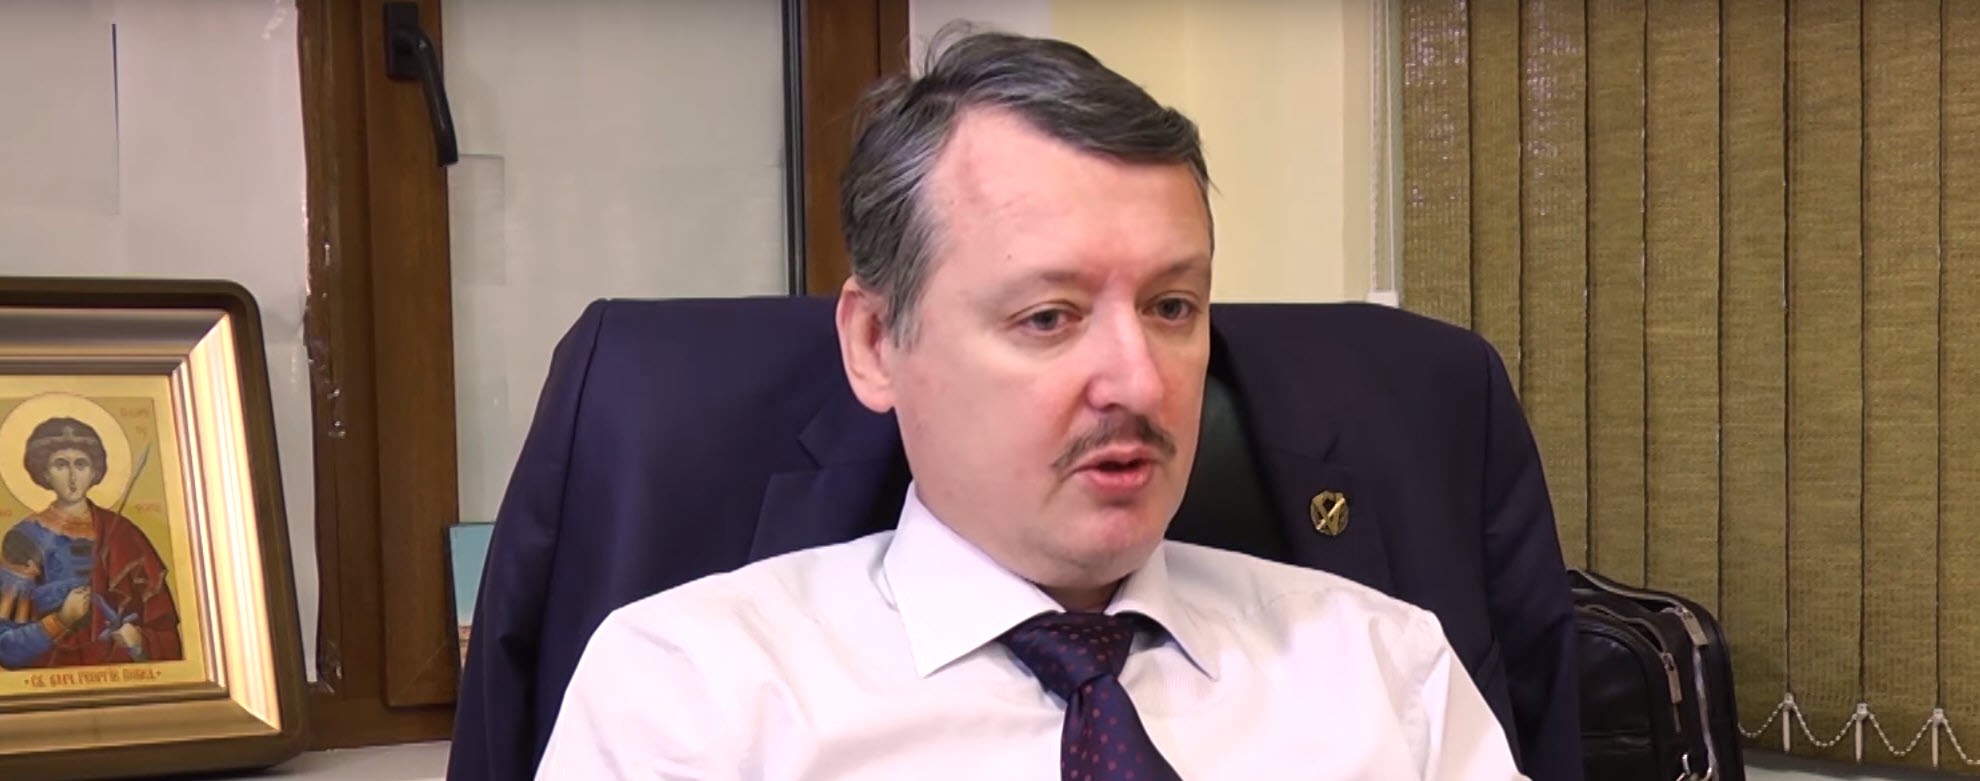 Igor “Strelkov” Girkin’s Revealing Interview